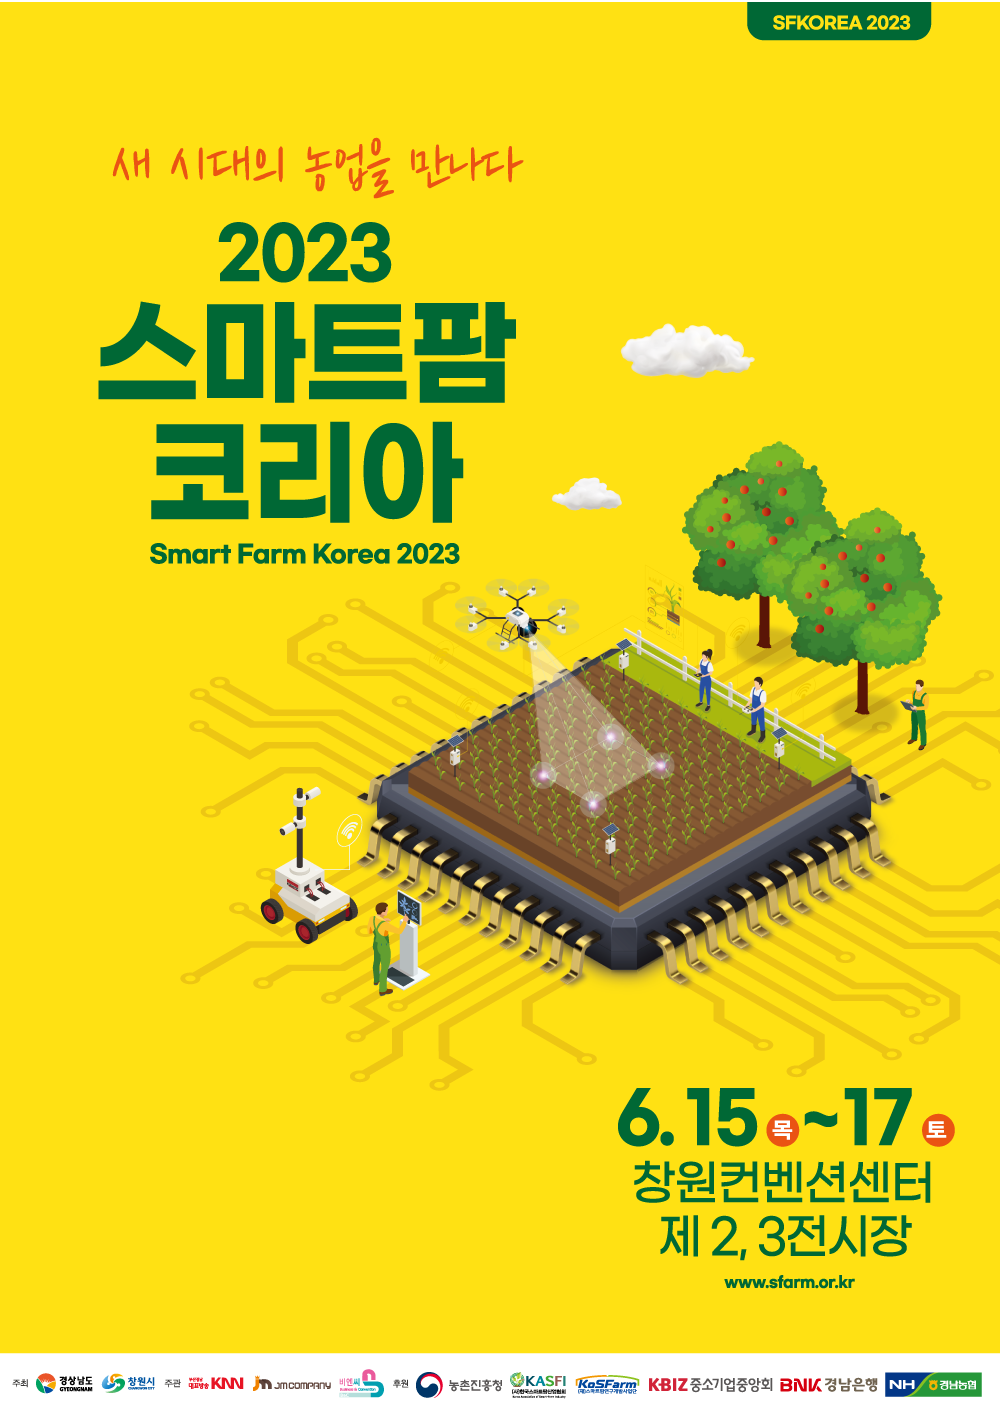 SFKOREA 2023<br>새 시대의 농업을 만나다<br>2023 스마트팜 코리아 Smart Farm Korea 2023<br>6.15(목)~17(토) 창원컨벤션센터 제2,3전시장 www.sfarm.or.kr<br>주최 - 경상남도 GYEONGNAM, 창원시 주관 - 부산경남대표방송KNN, JM COMPANY, 비엔씨 <br>후원 - 농촌진흥청, KASFI(사)한국스마트팜산업협회, KoSFarm(재)스마트팜연구개발사업단, KBIZ중소기업중앙회, BNK경남은행, NH경남농협<br>